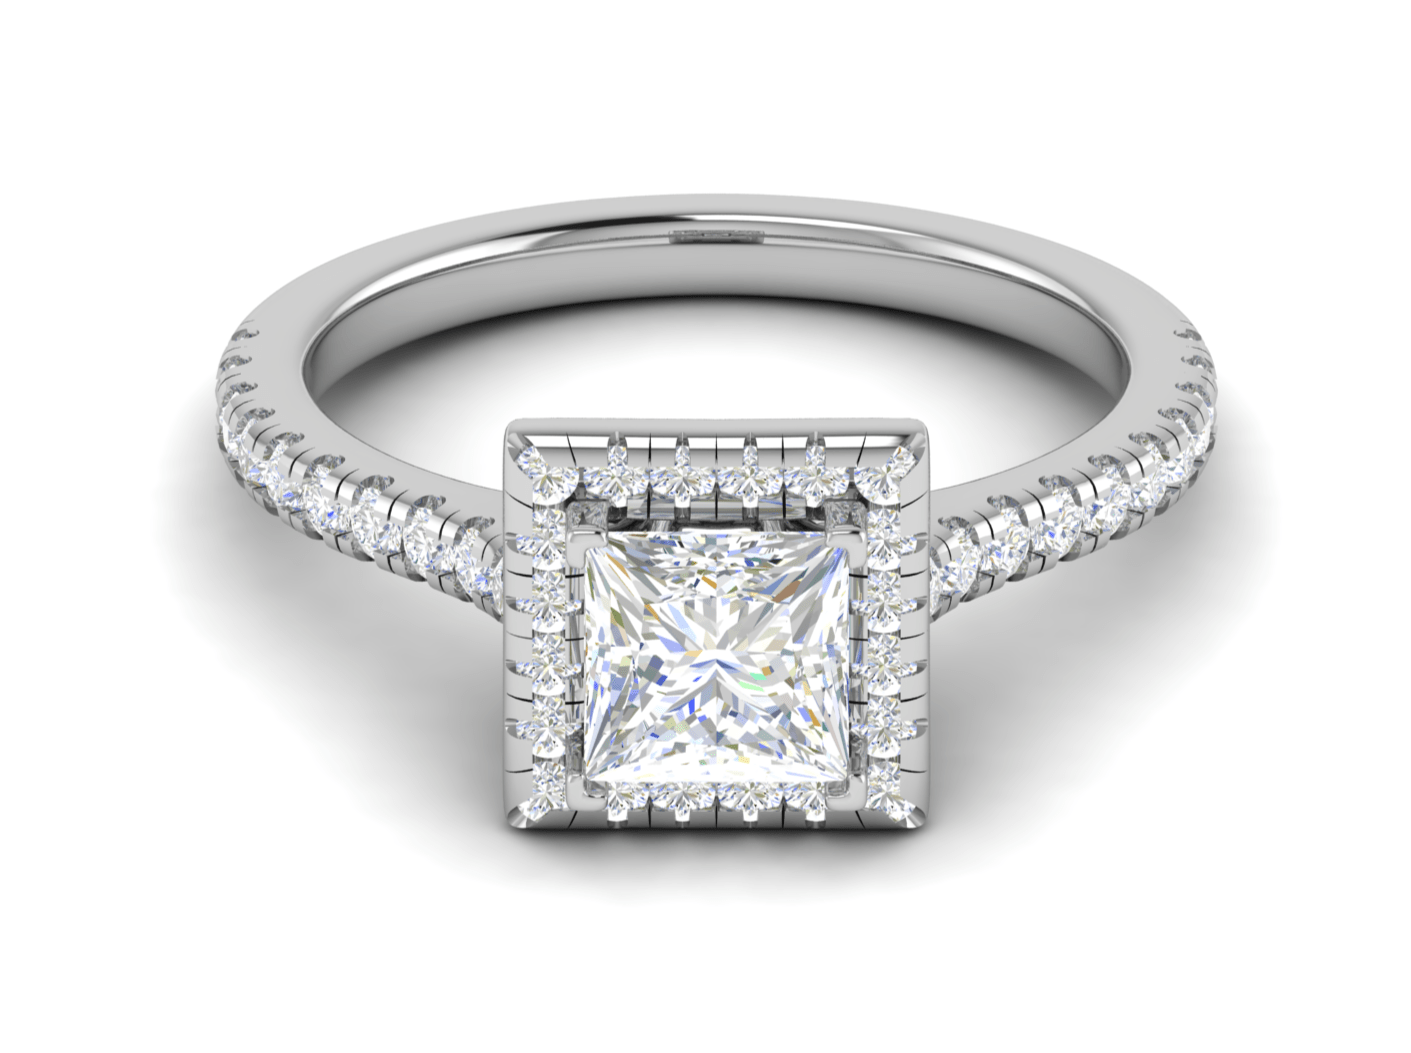 1ct Solitaire Princess Cut Diamond Engagement Ring 14K White Gold